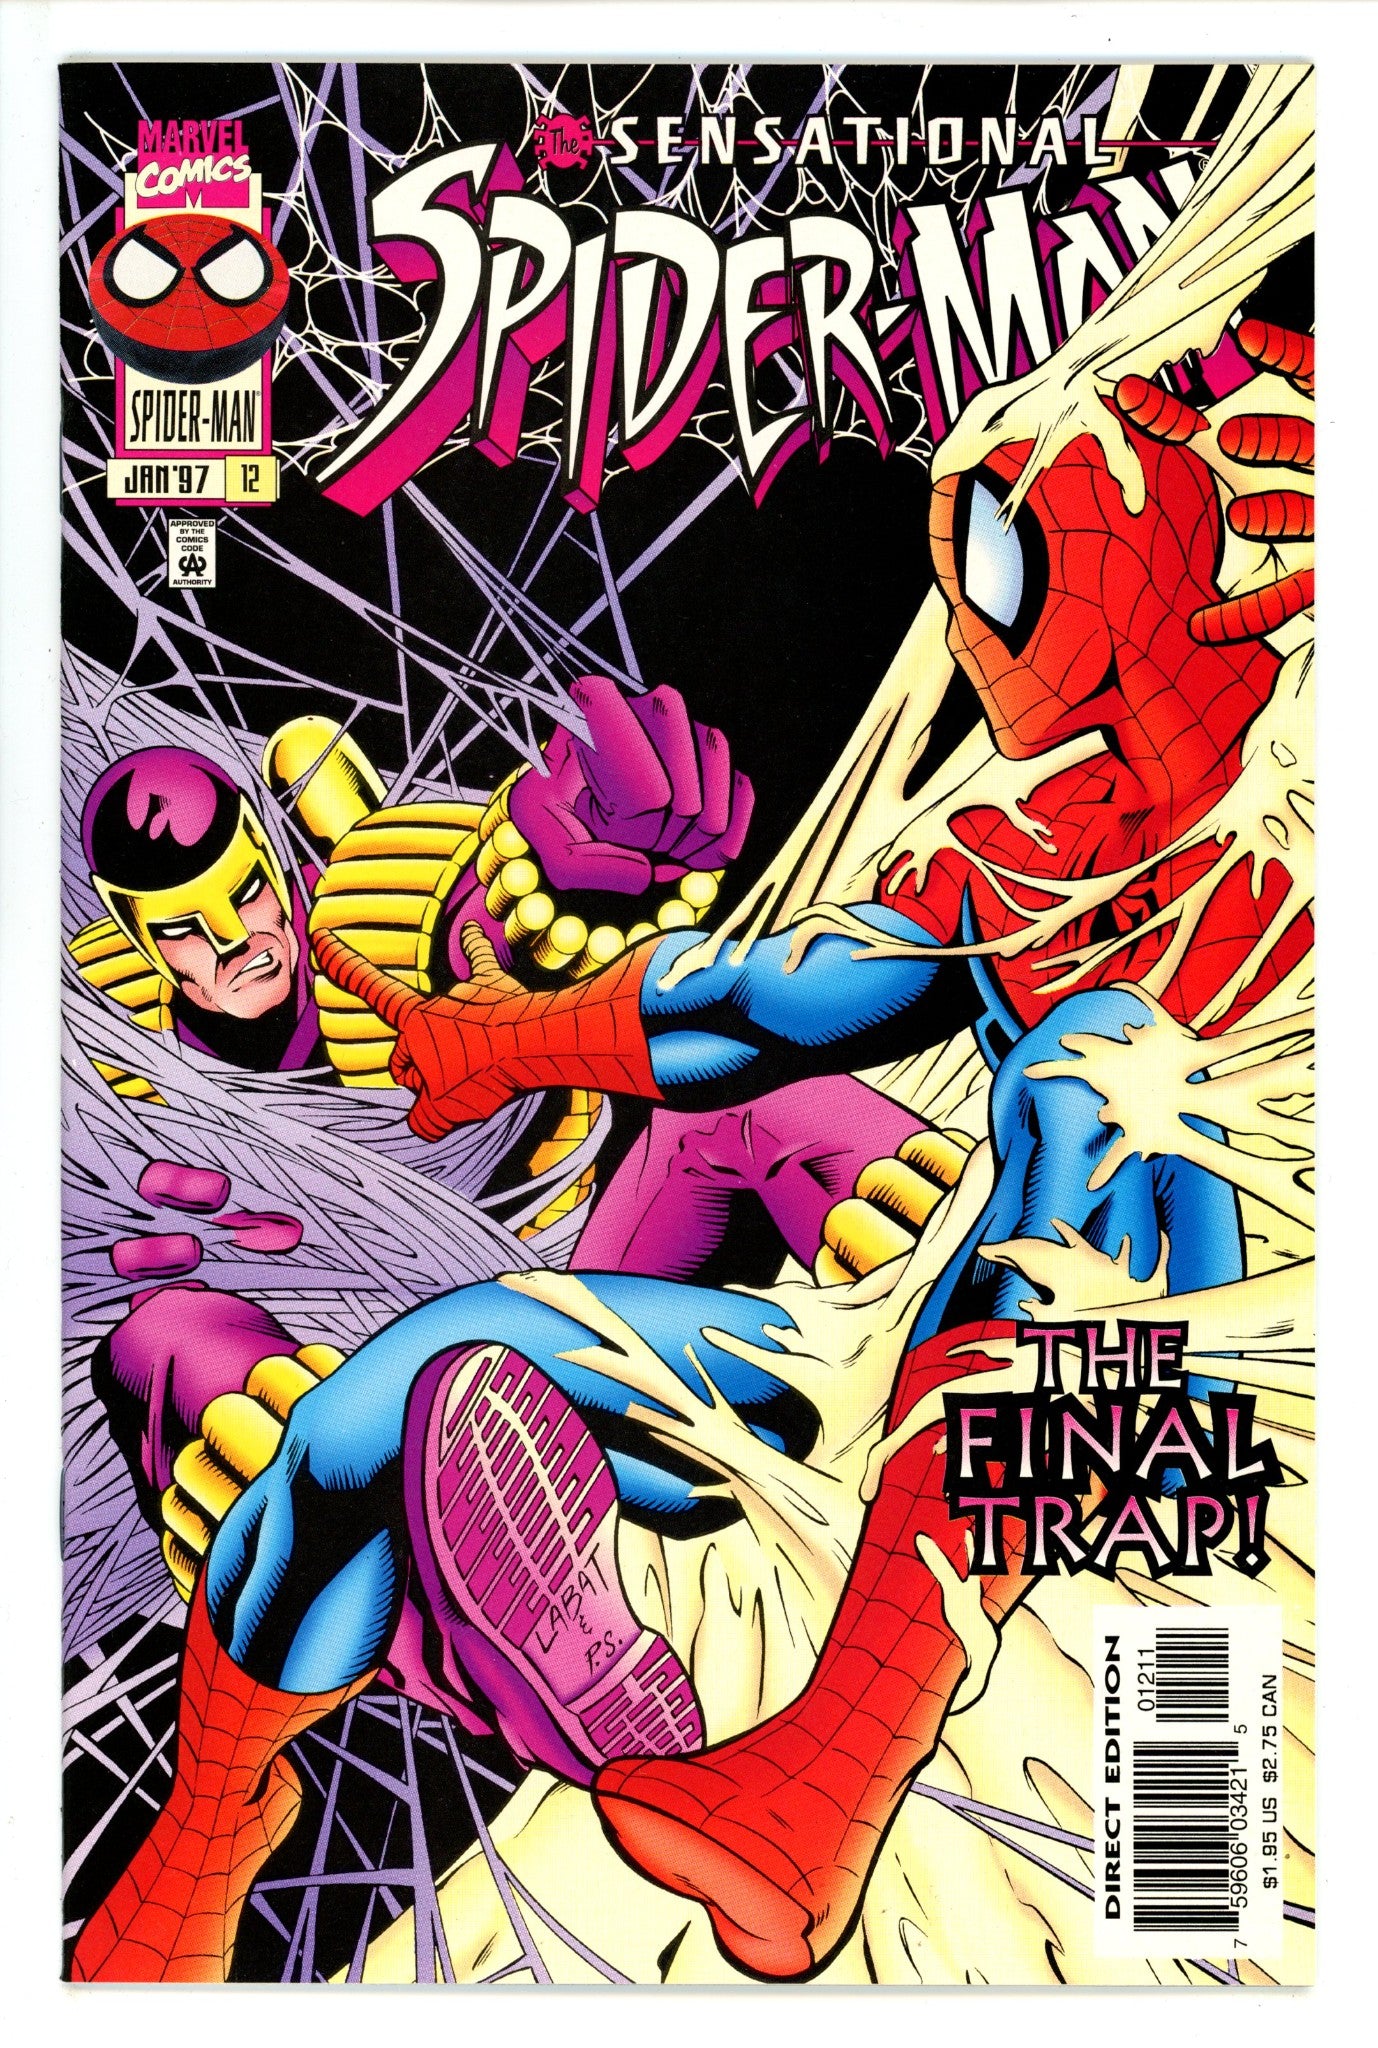 The Sensational Spider-Man Vol 1 12 (1996)